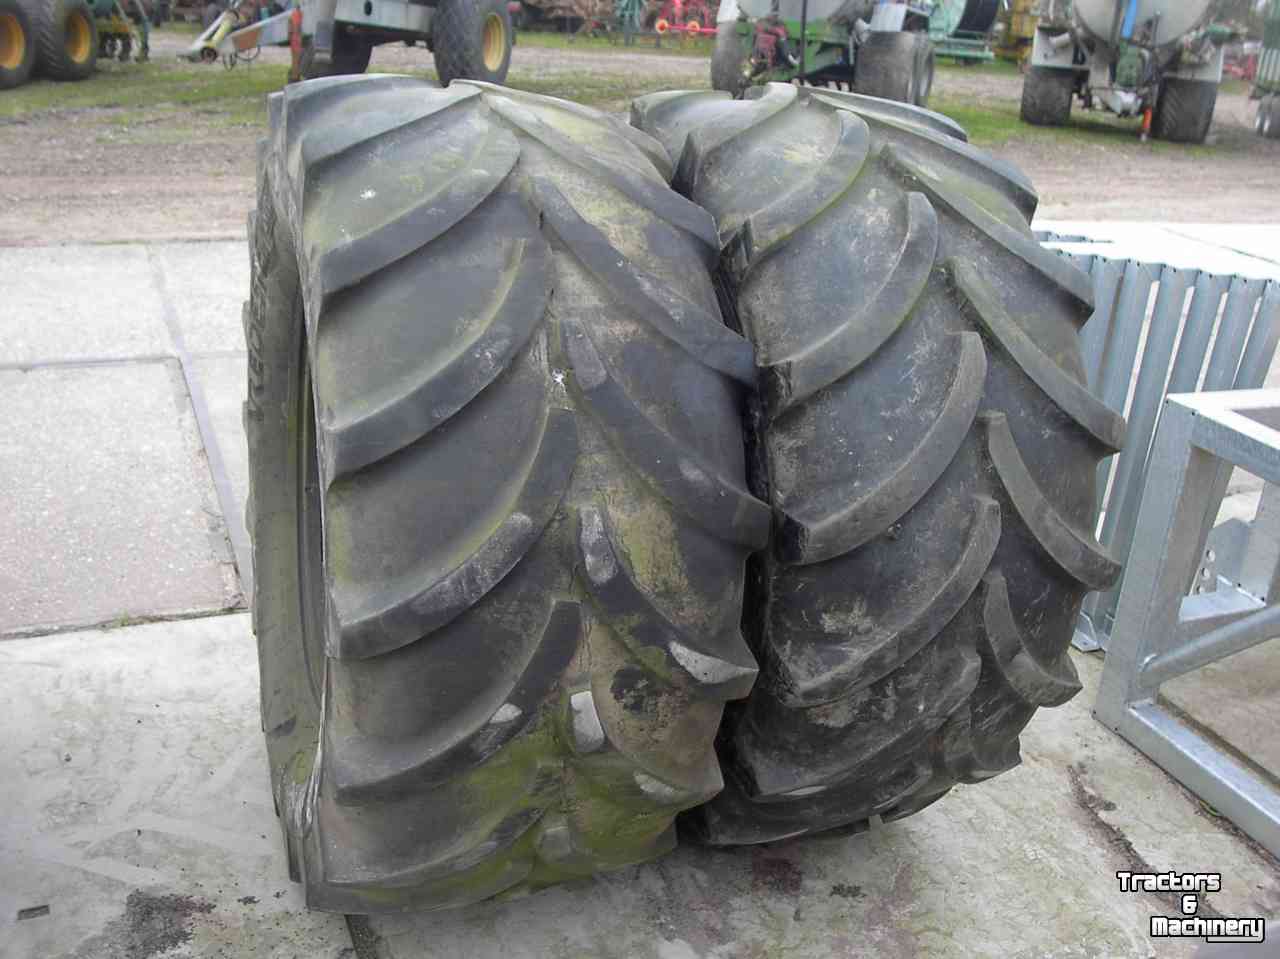 Wheels, Tyres, Rims & Dual spacers Vredestein 600/65 x 28